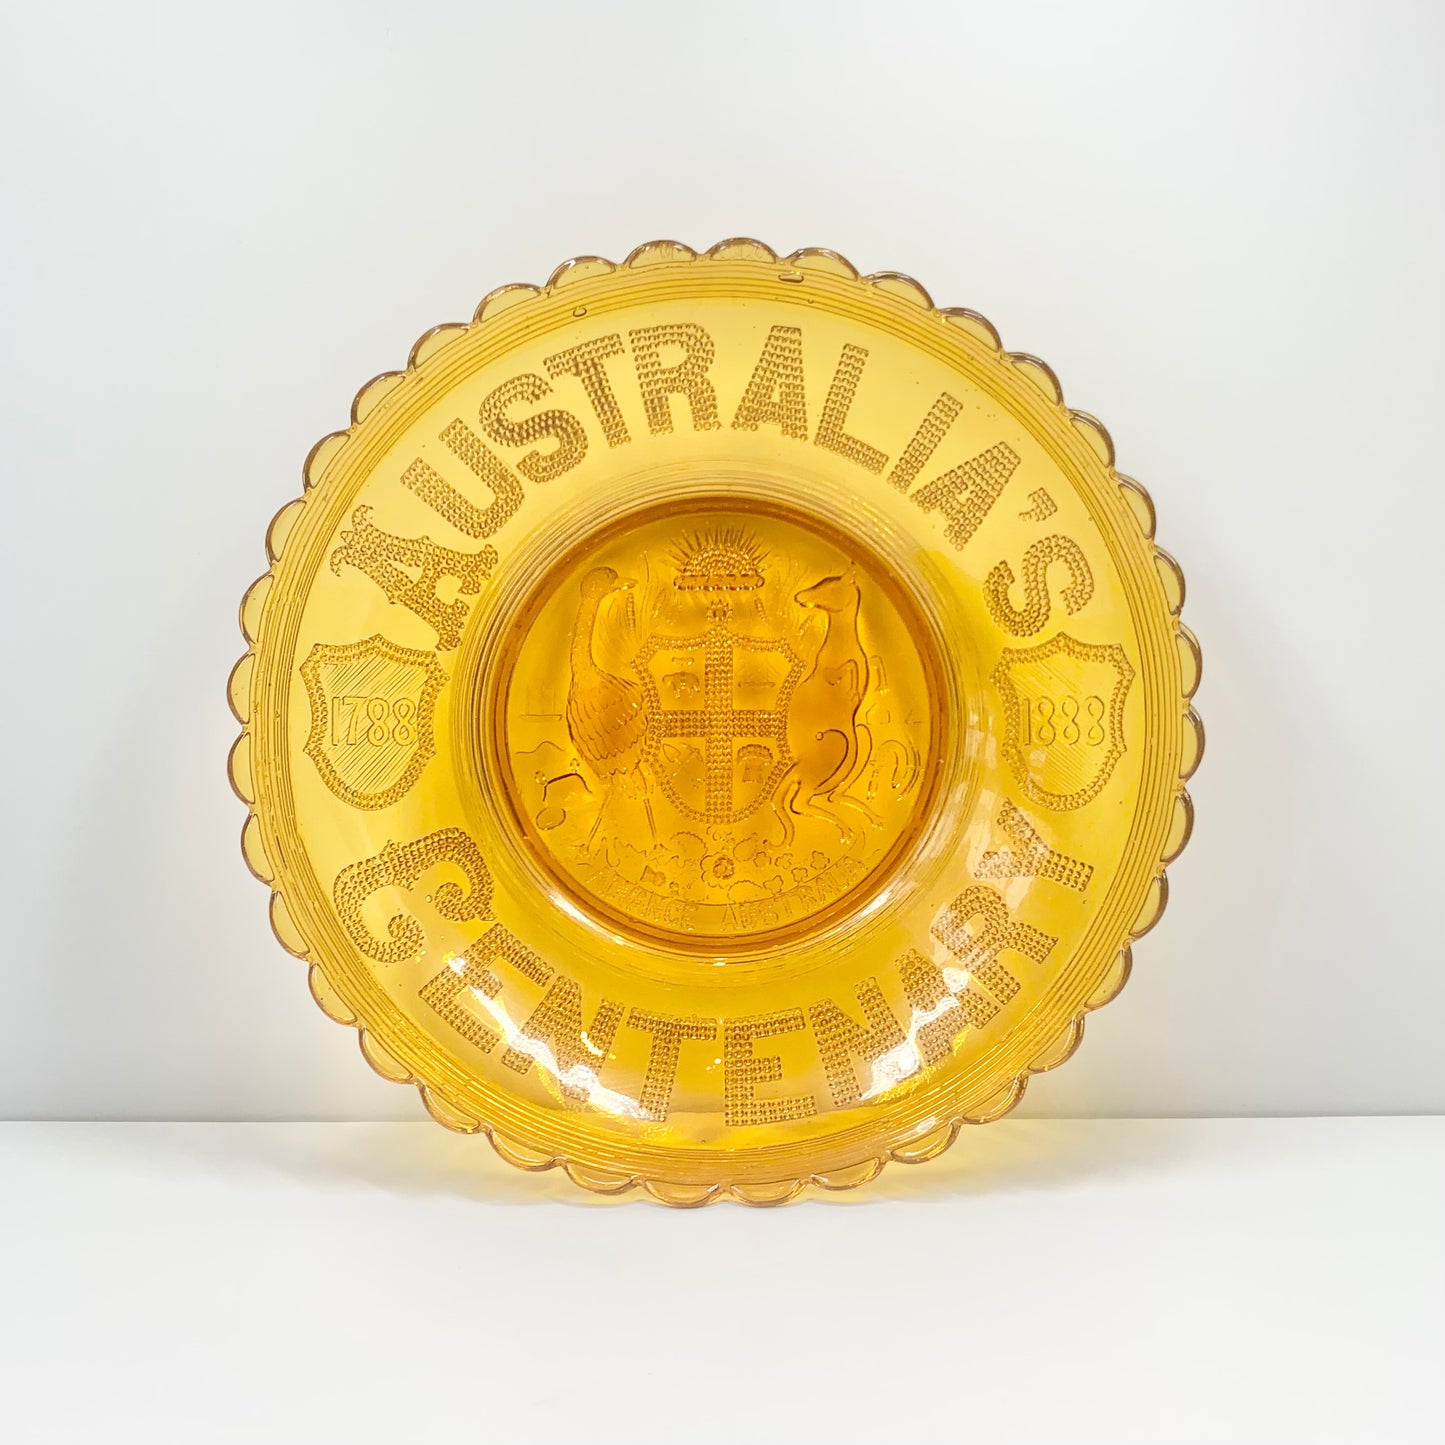 Antique highly collectible Australian amber glass centenary bowl circa 1888